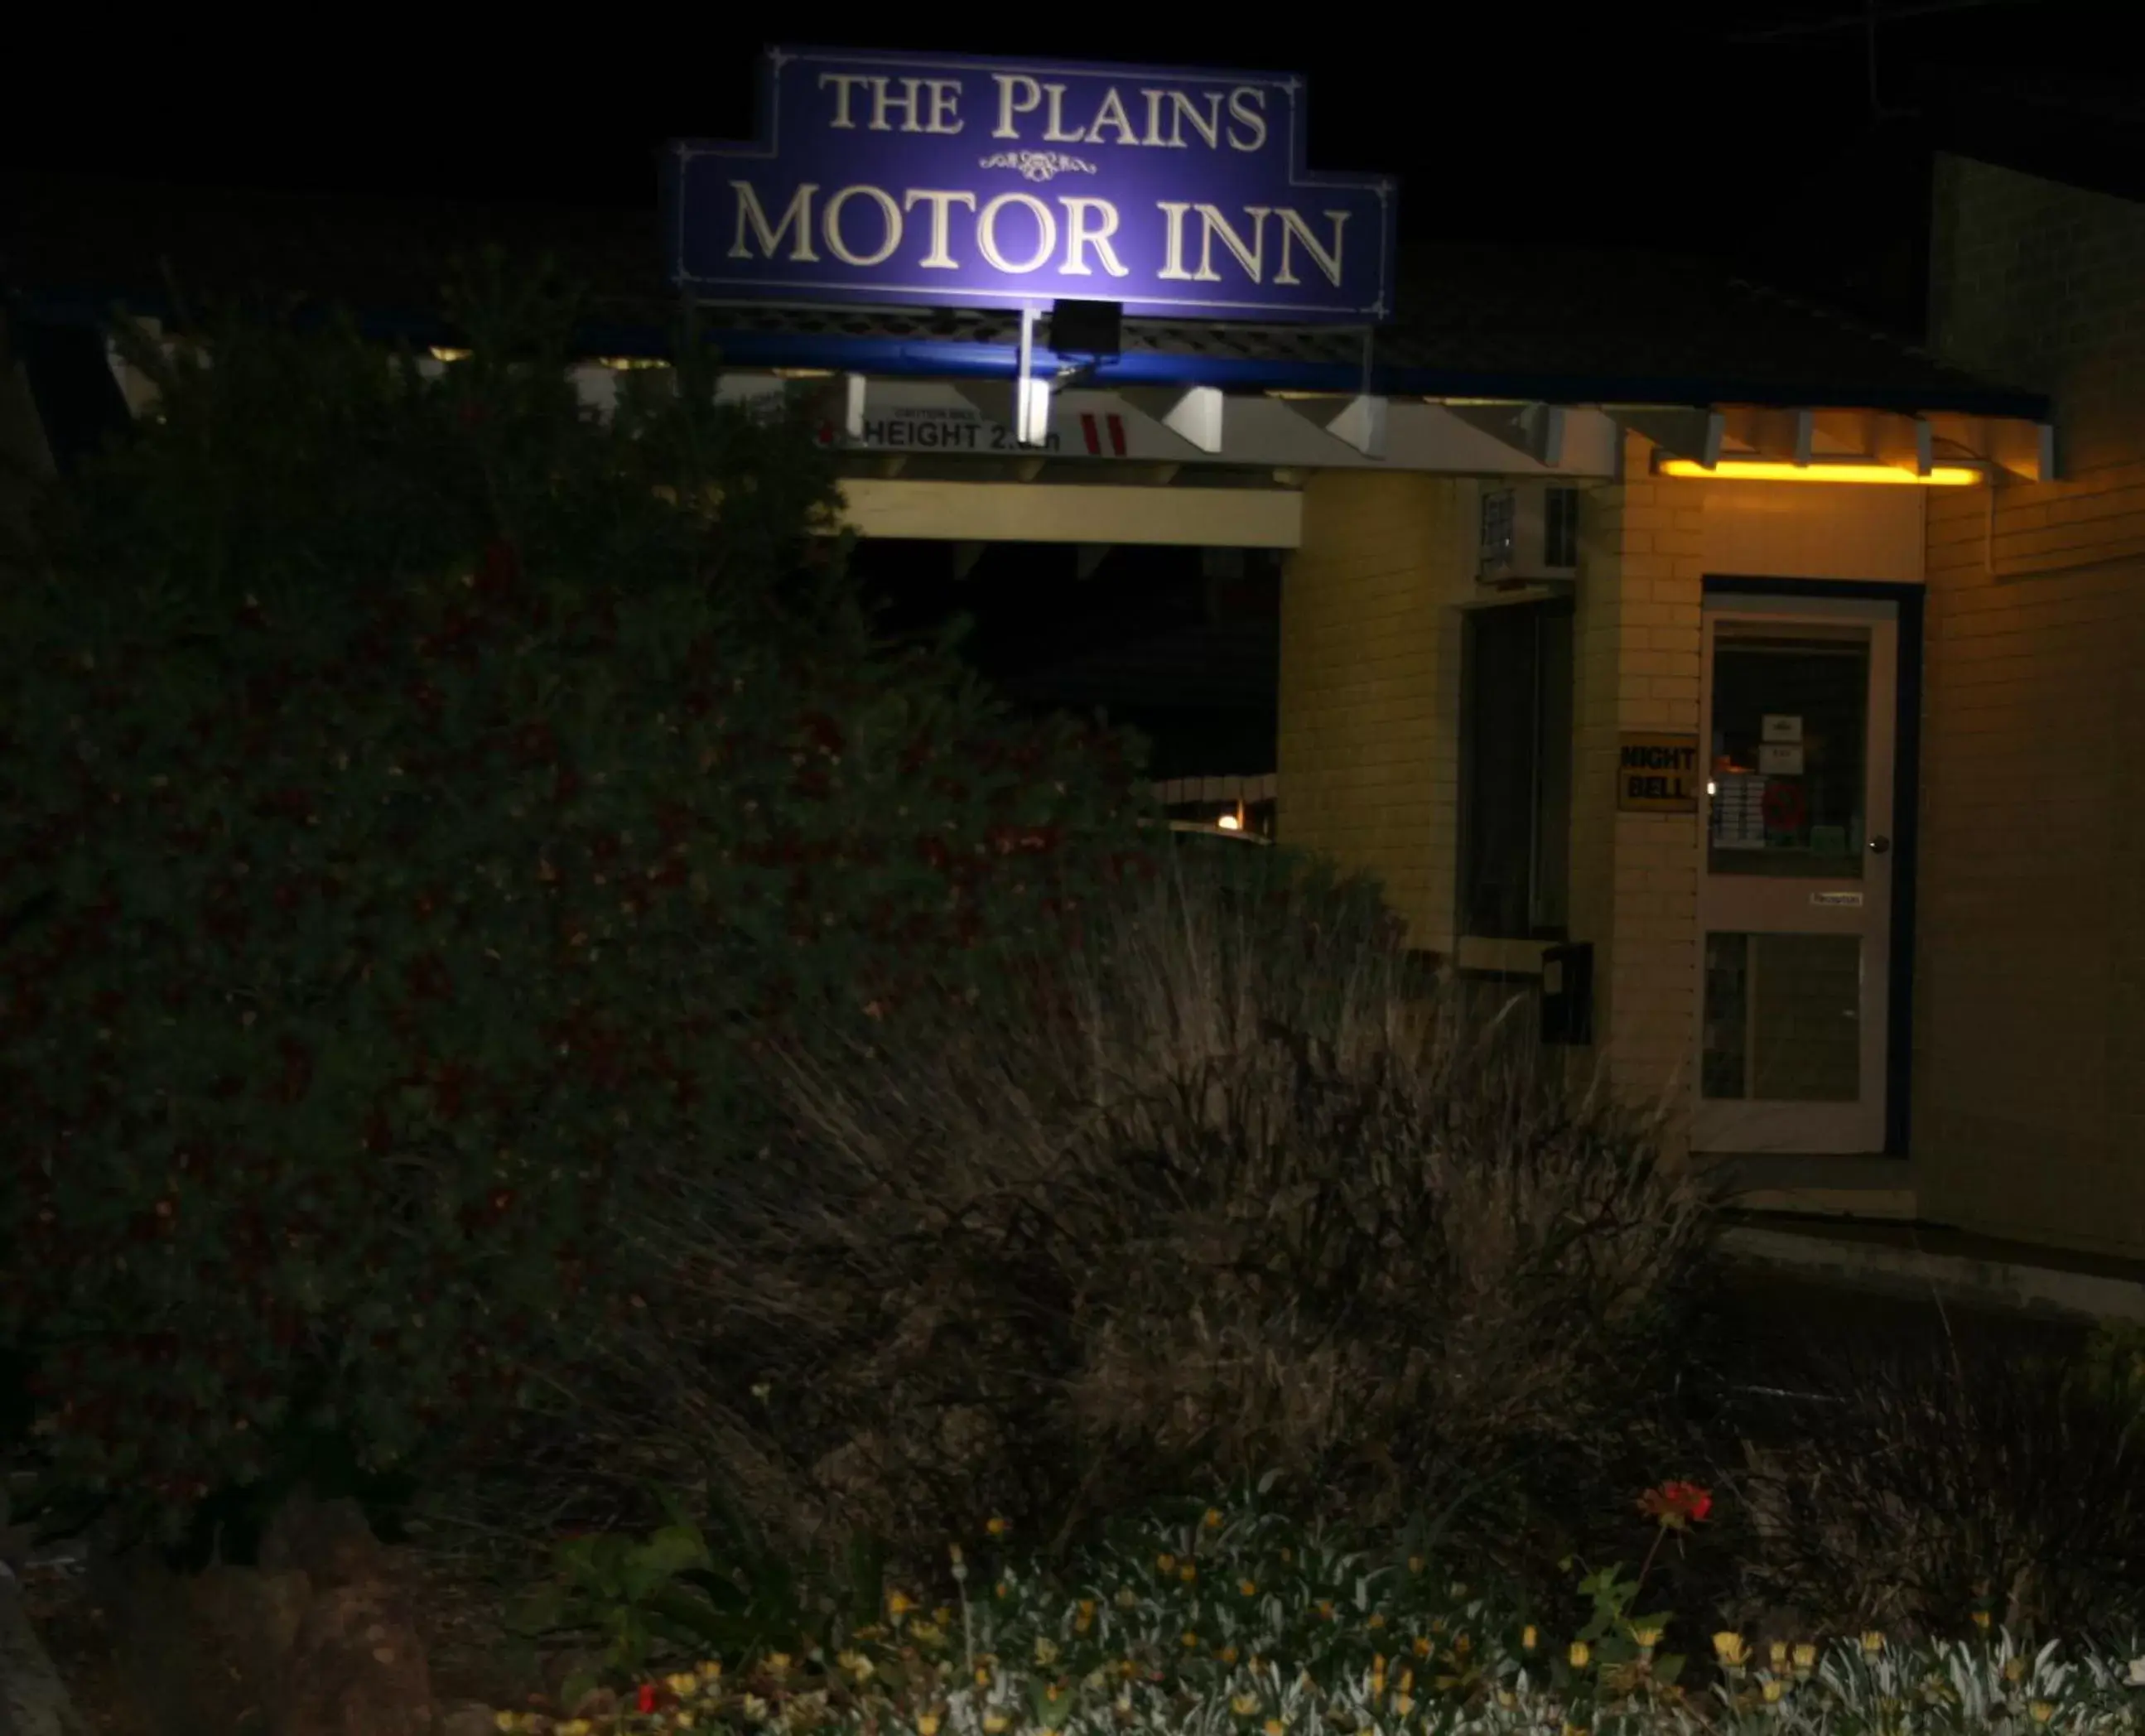 Night, Facade/Entrance in The Plains Motor Inn